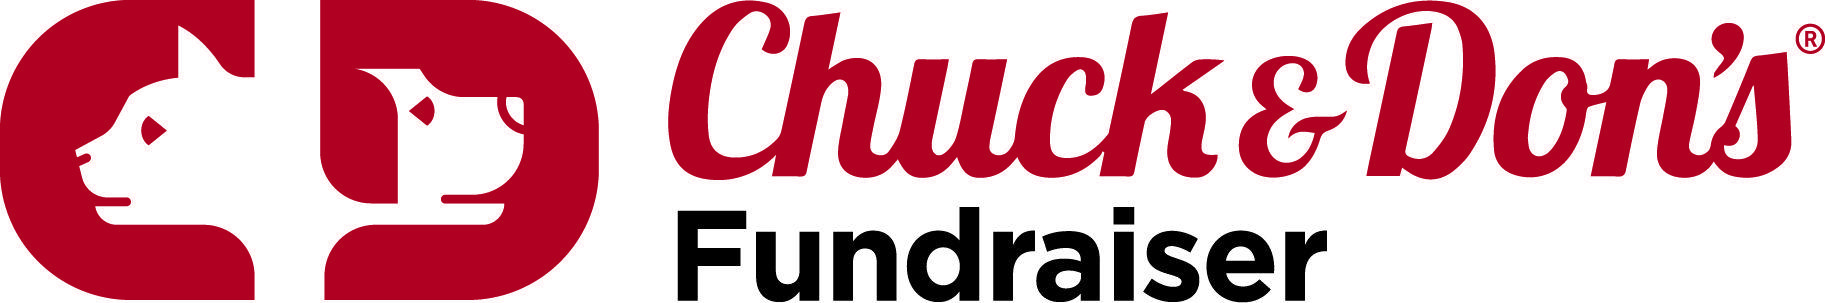 Chuck Logo - Raising Awareness. Chuck & Don's